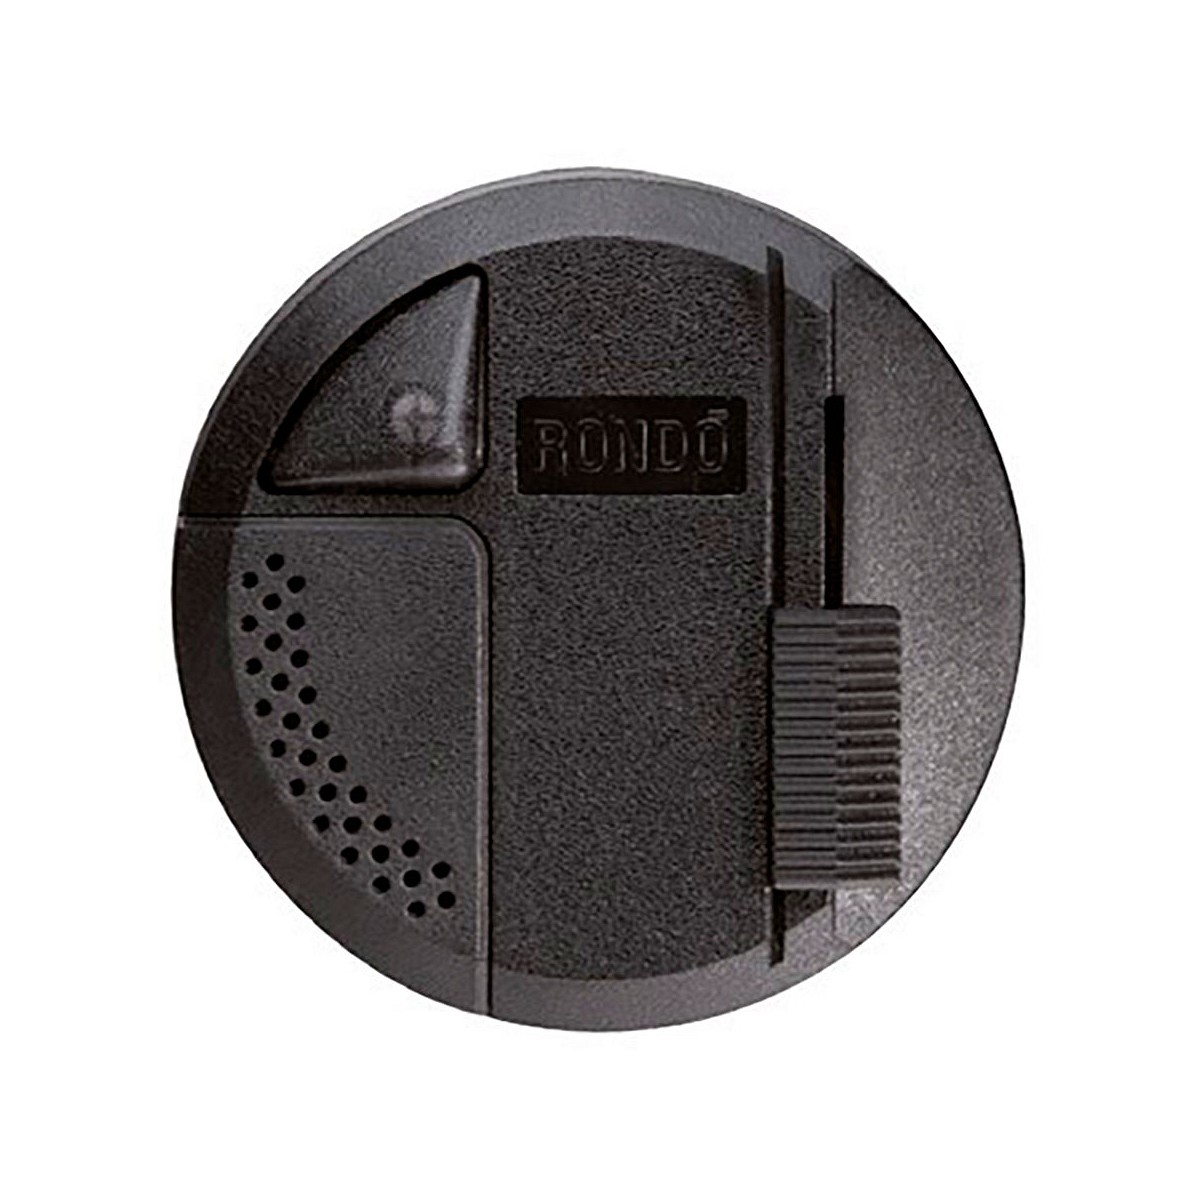 Regulador/interruptor de luz de pie redondo 5600/led 4-100w negro